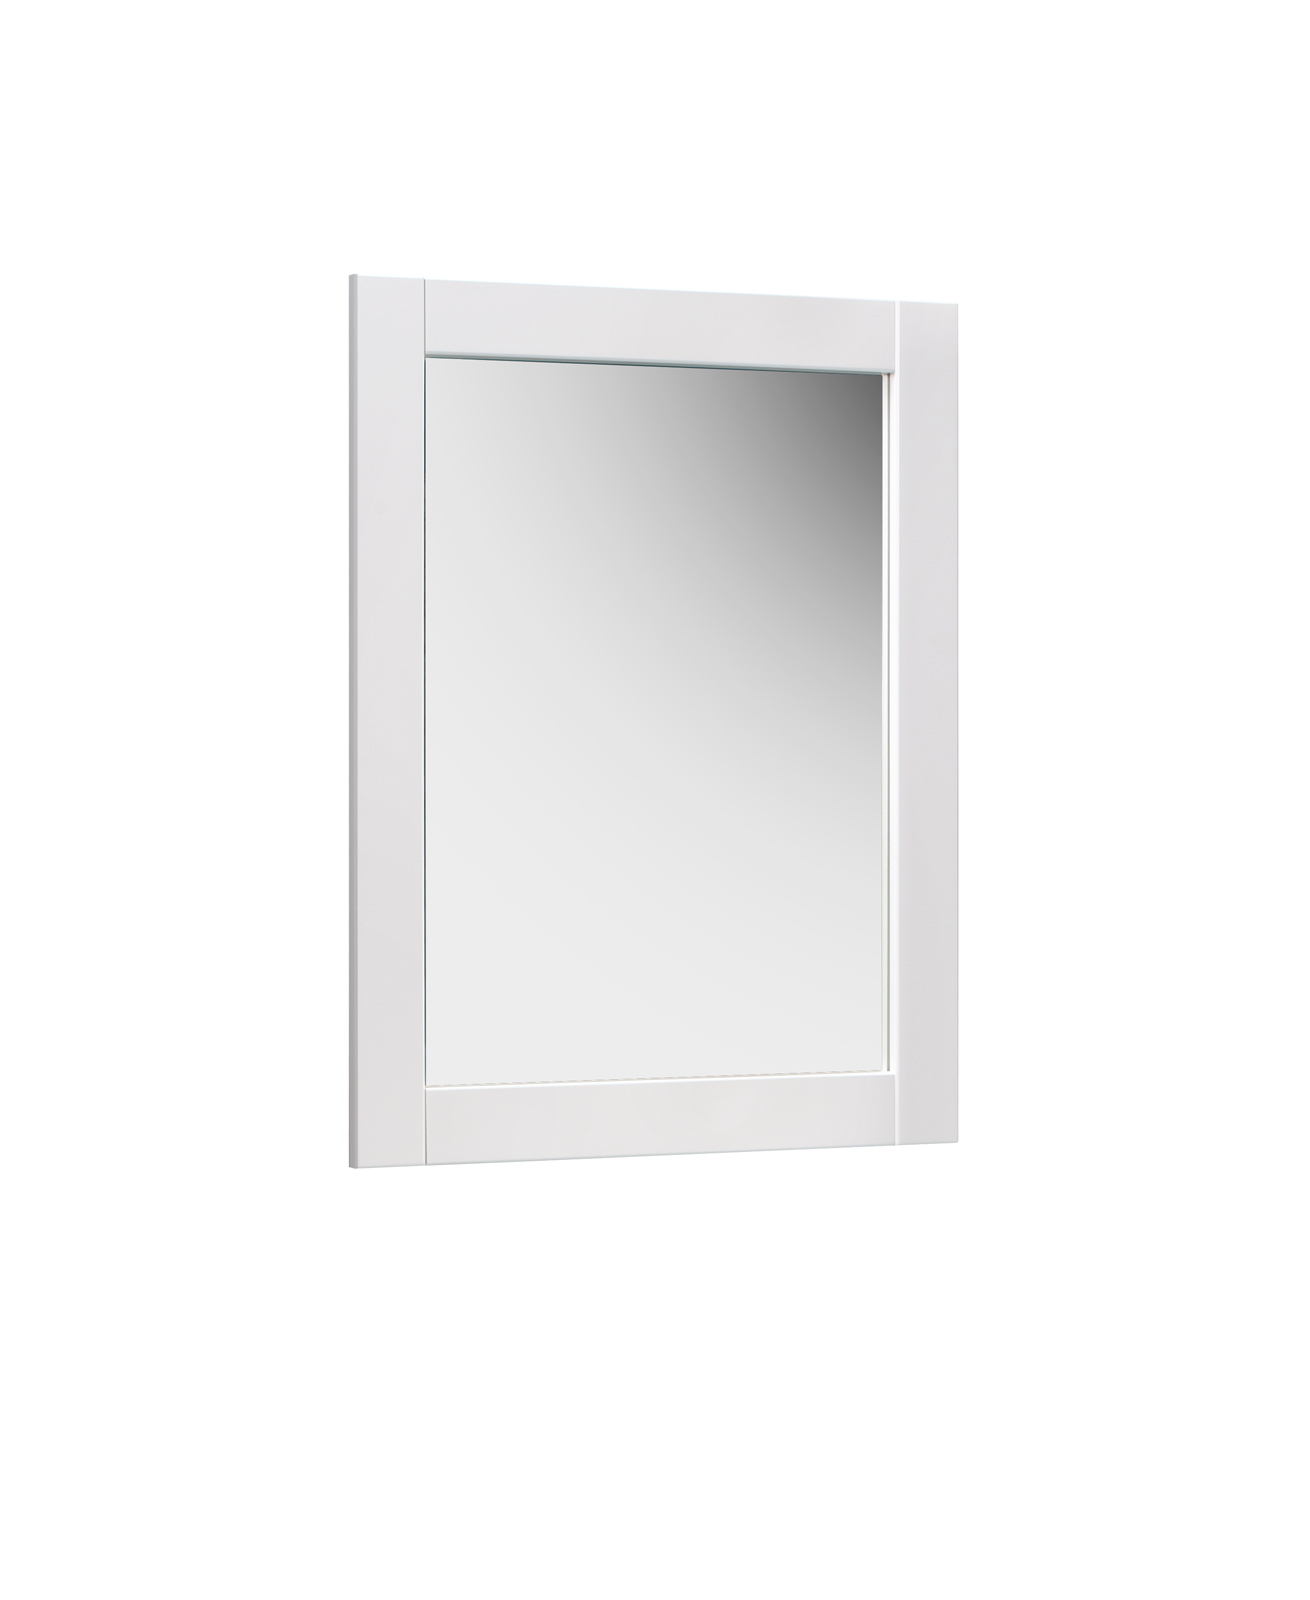 Зеркало Авангард В 60, цвет белый матовый (18)